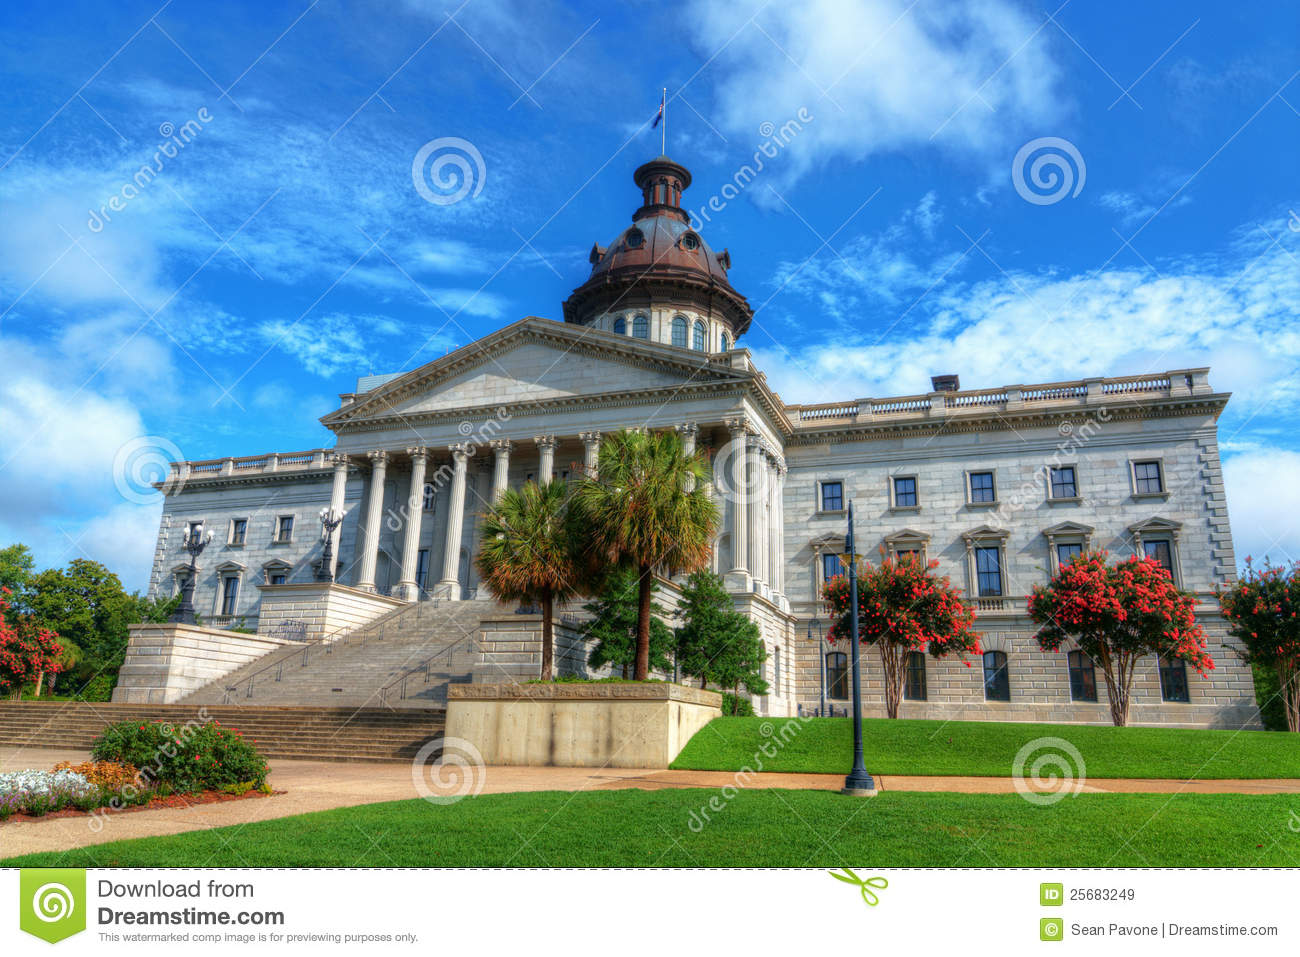 South Carolina State House Royalty Free Stock Images   Image  25683249